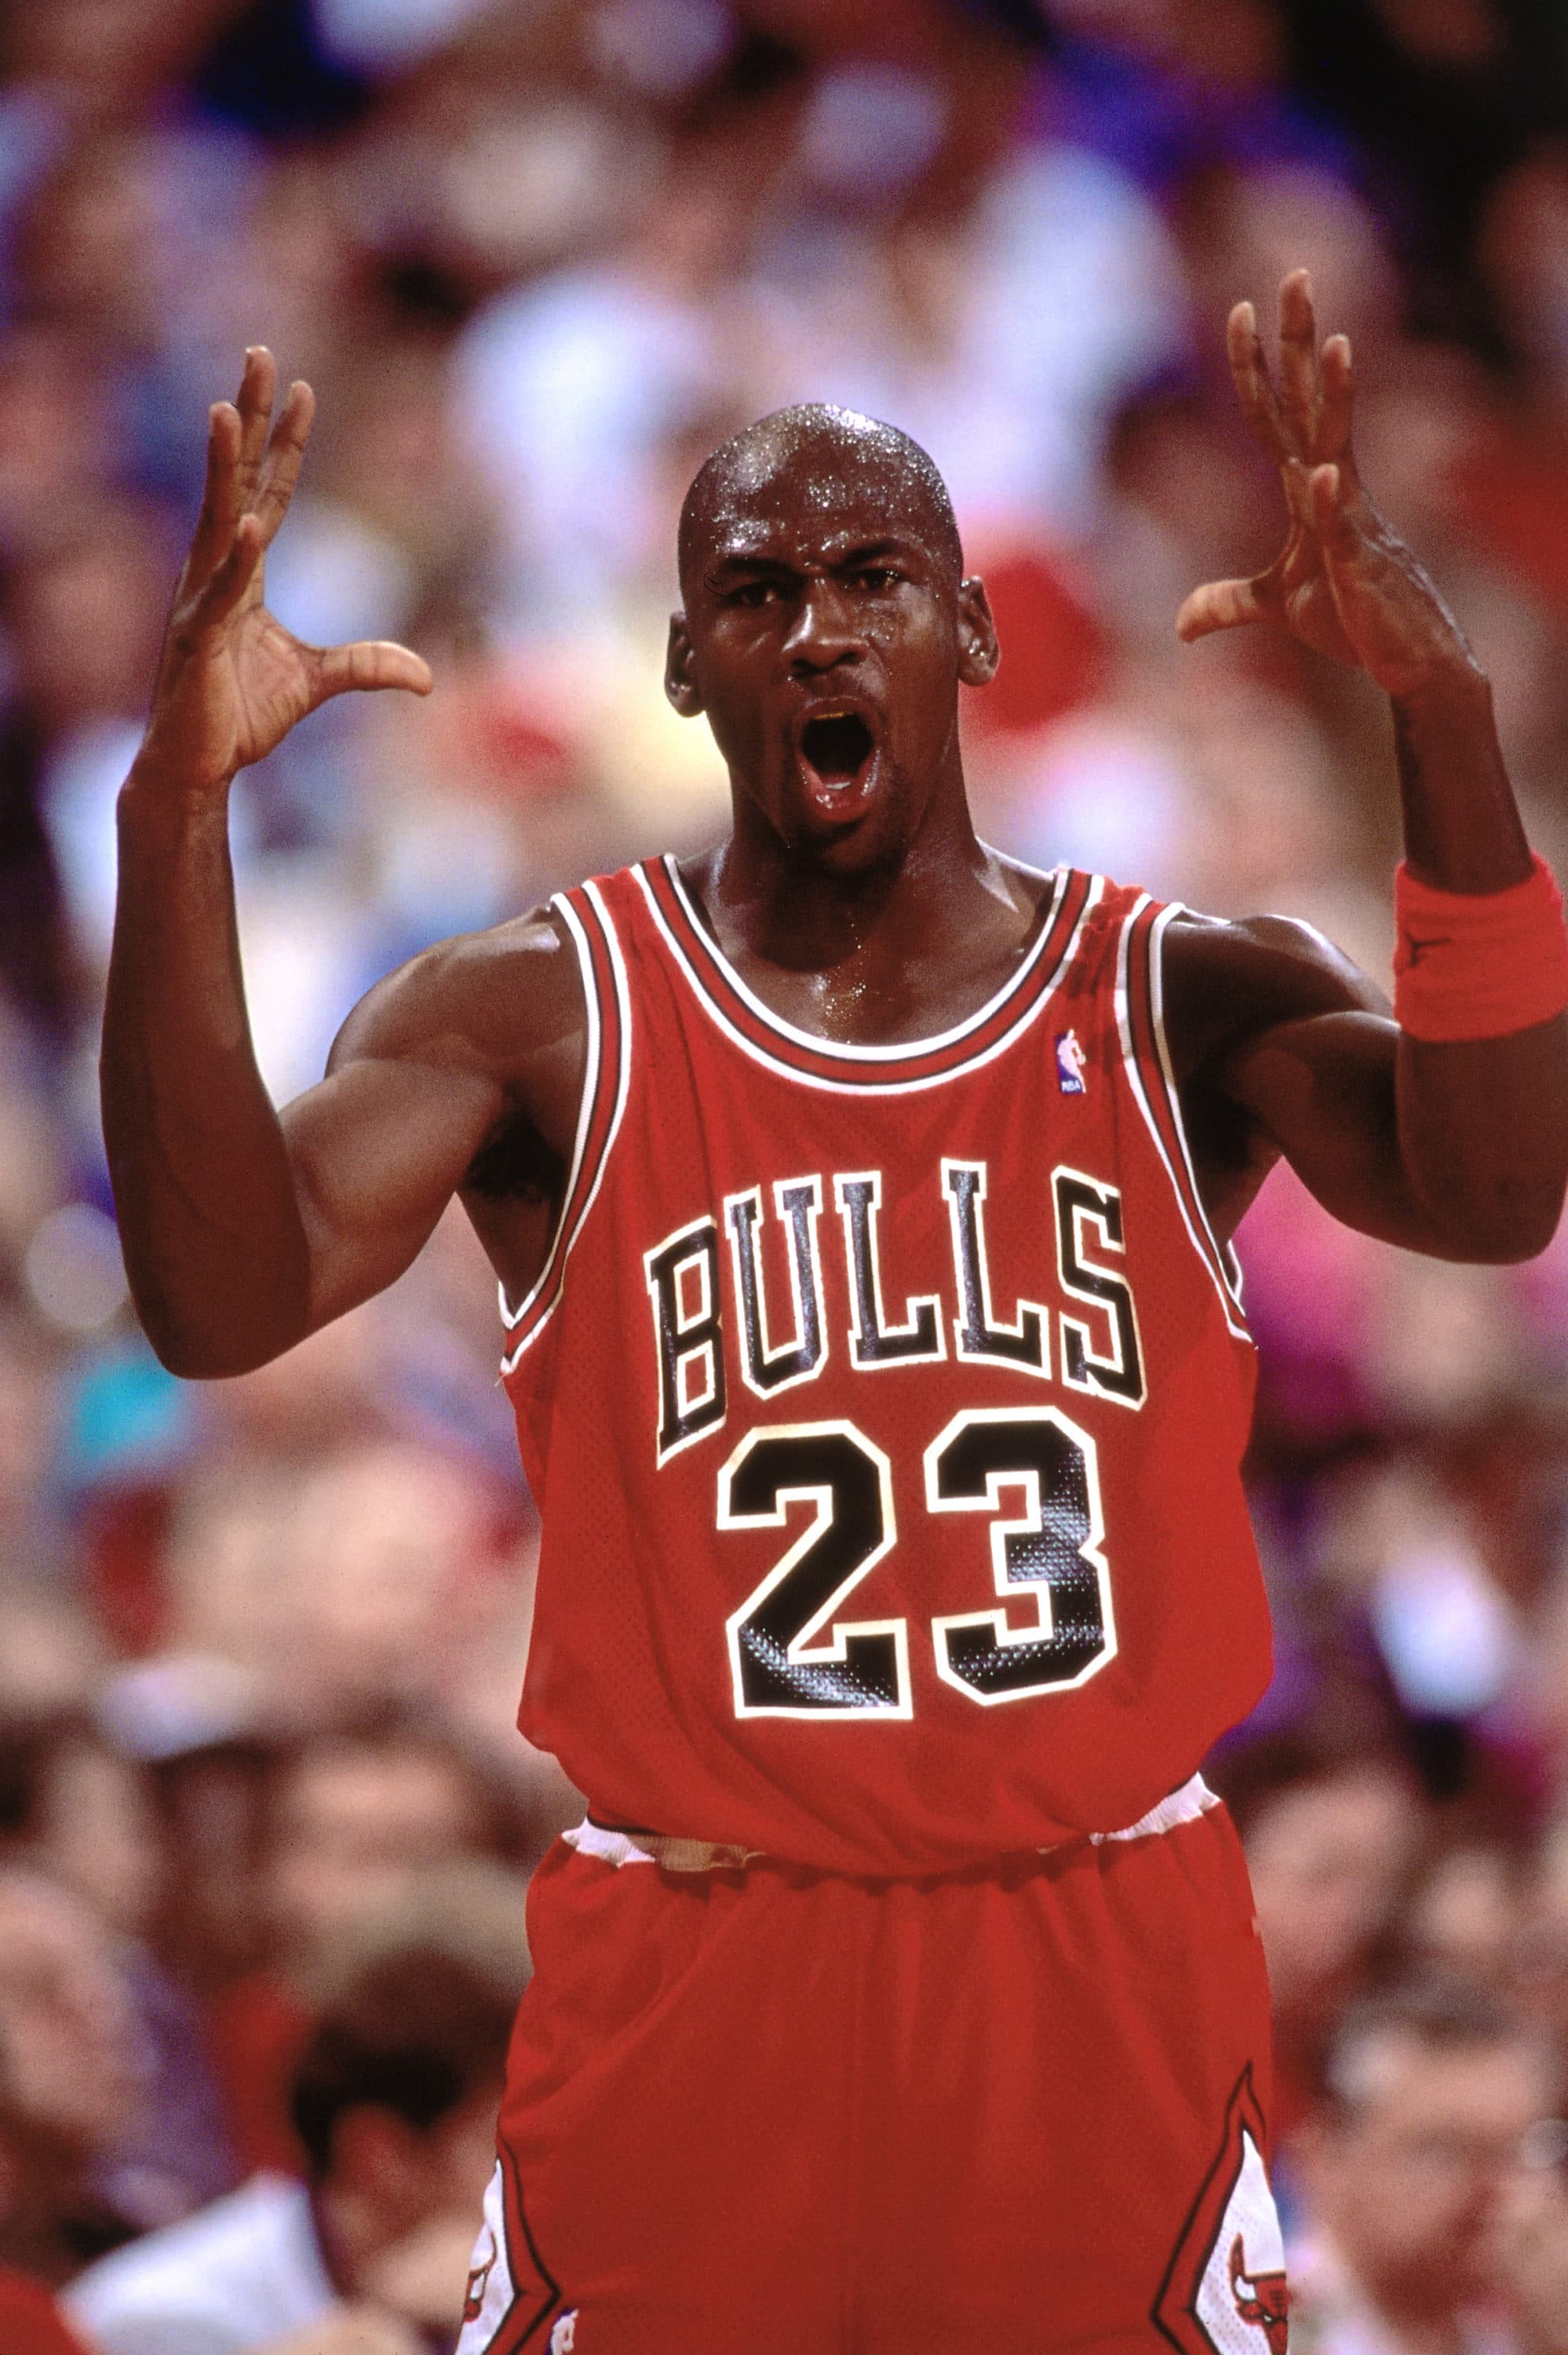 The Last Dance': The Chicago Bulls' 1997-98 season – The Morning Call